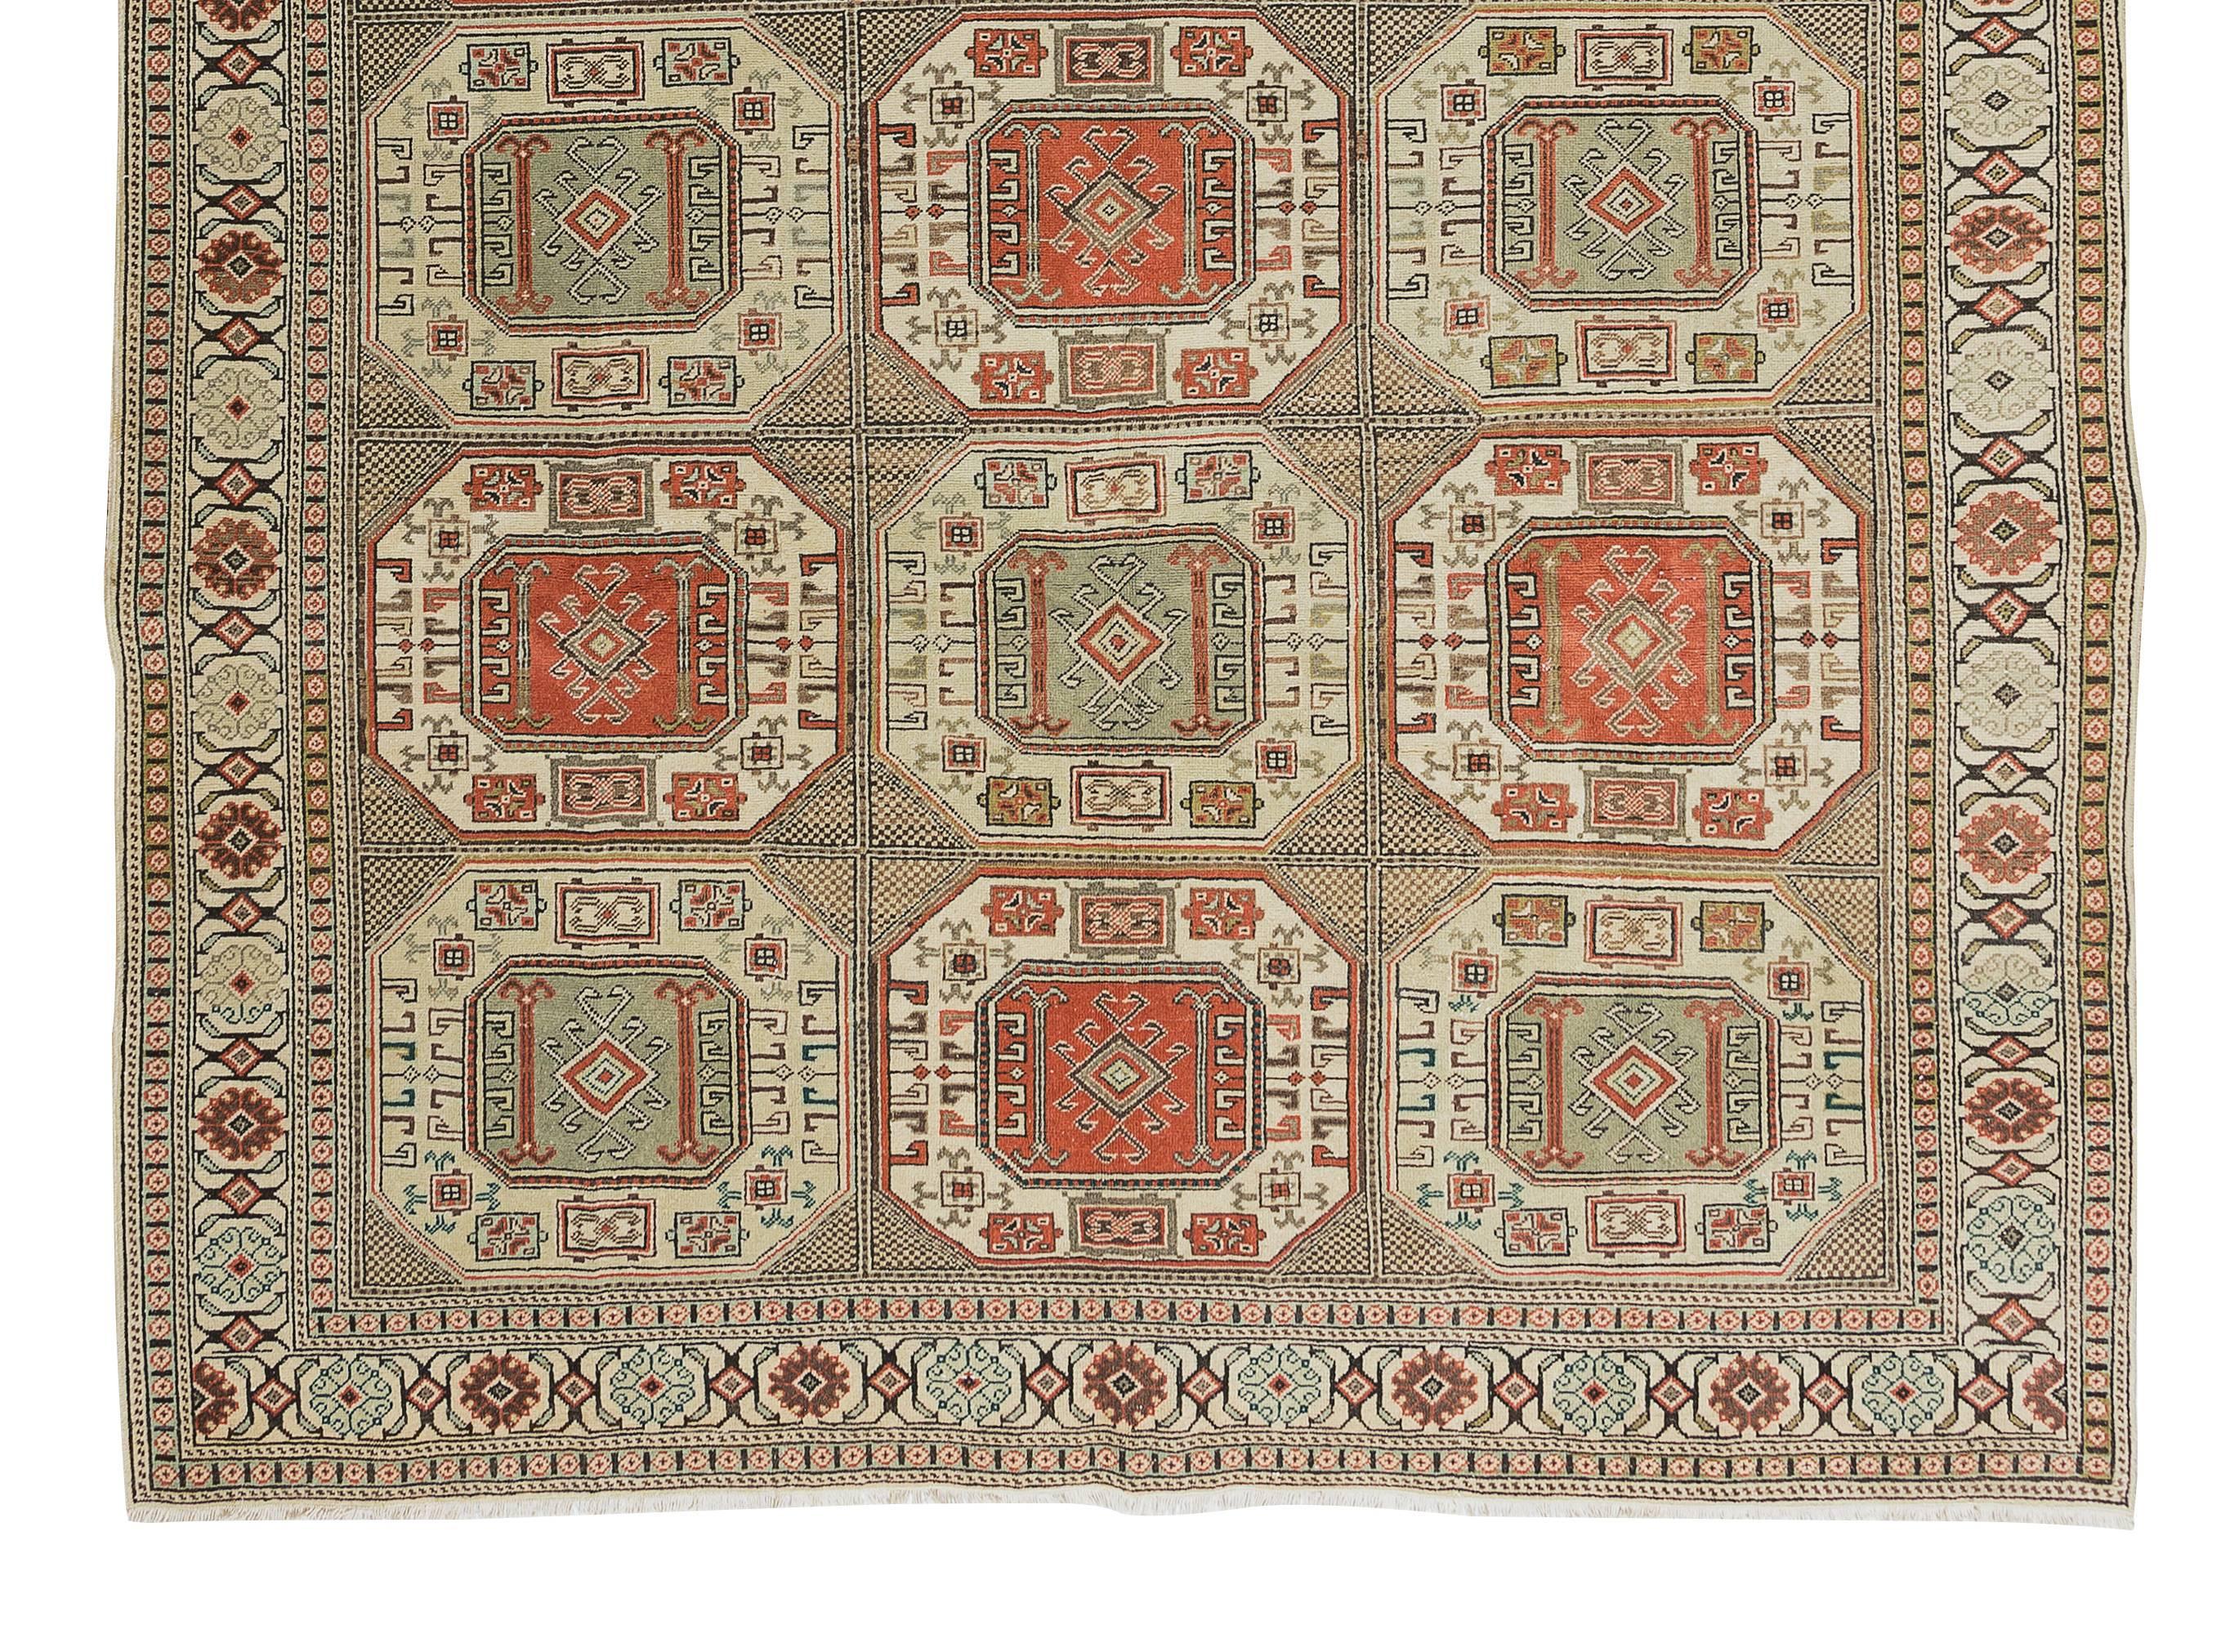 Hand-Woven 6.6x9.7 Ft 1960's Handmade Kysari Rug, Muted Colors, Geometric & Tribal Patterns